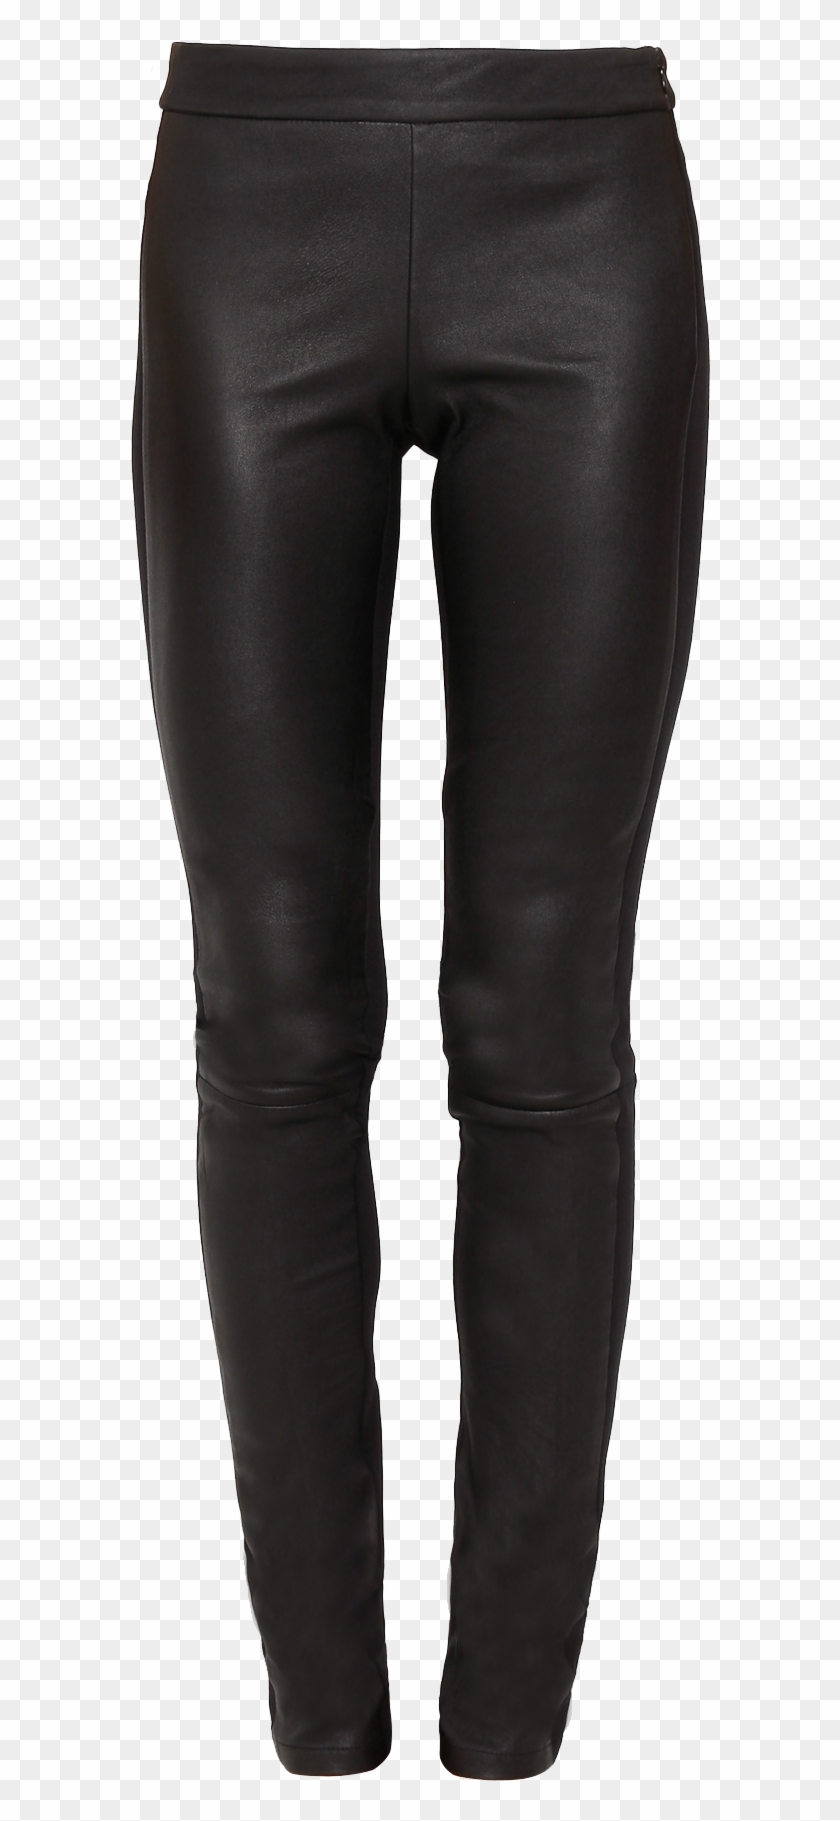 Calzedonia Leather Leggings Clipart #3015775